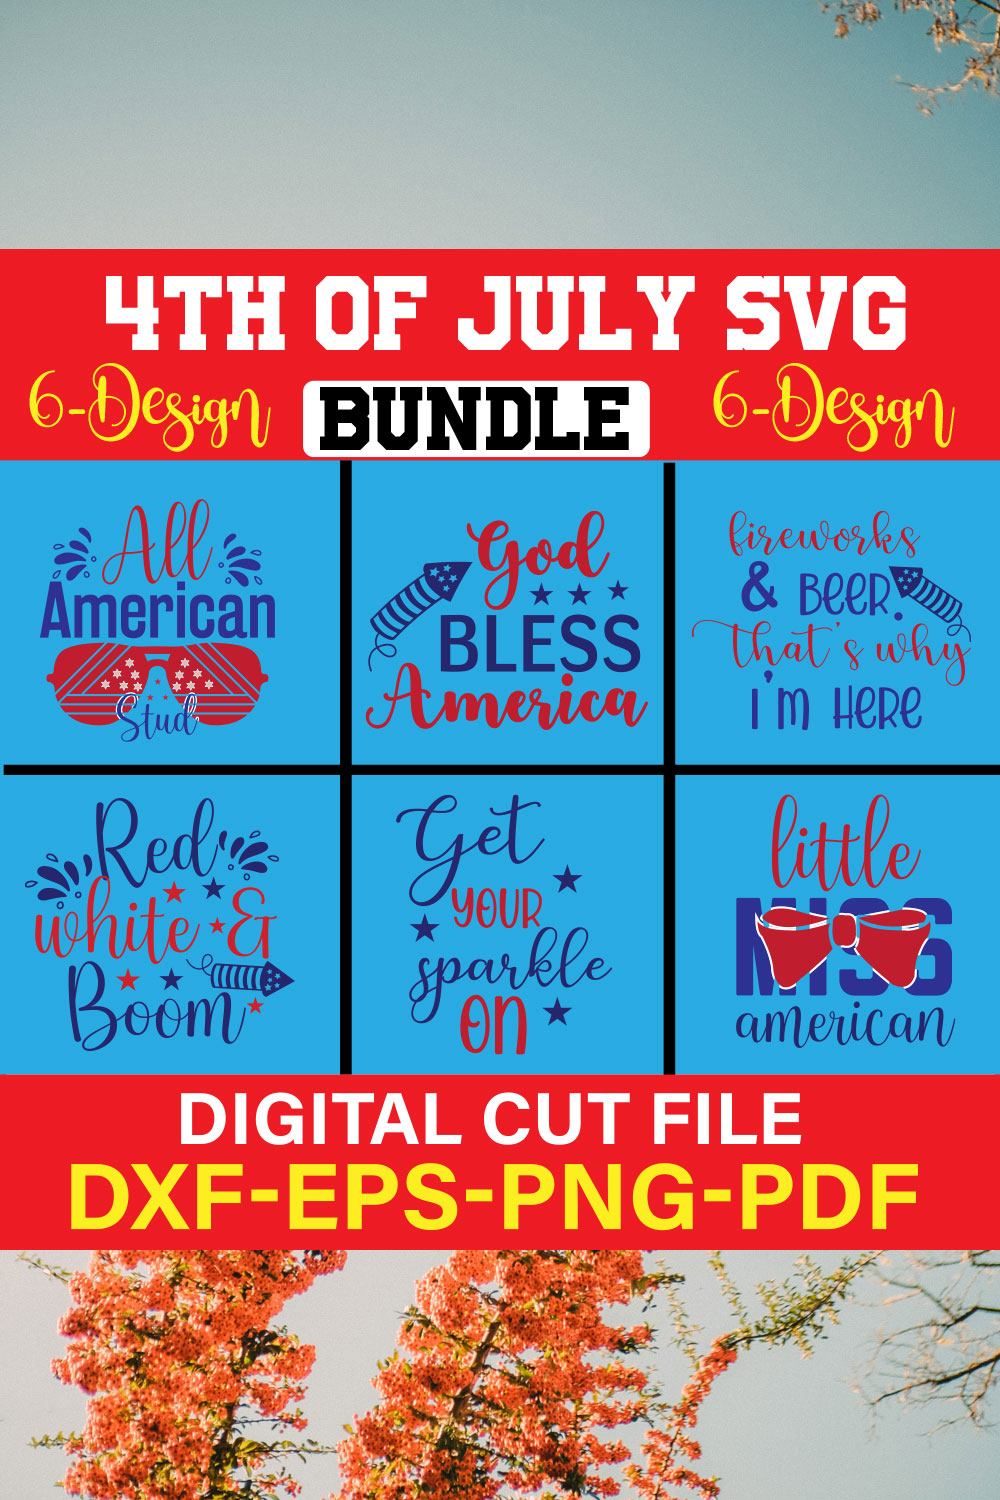 4th of July SVG Bundle Vol-4 pinterest preview image.